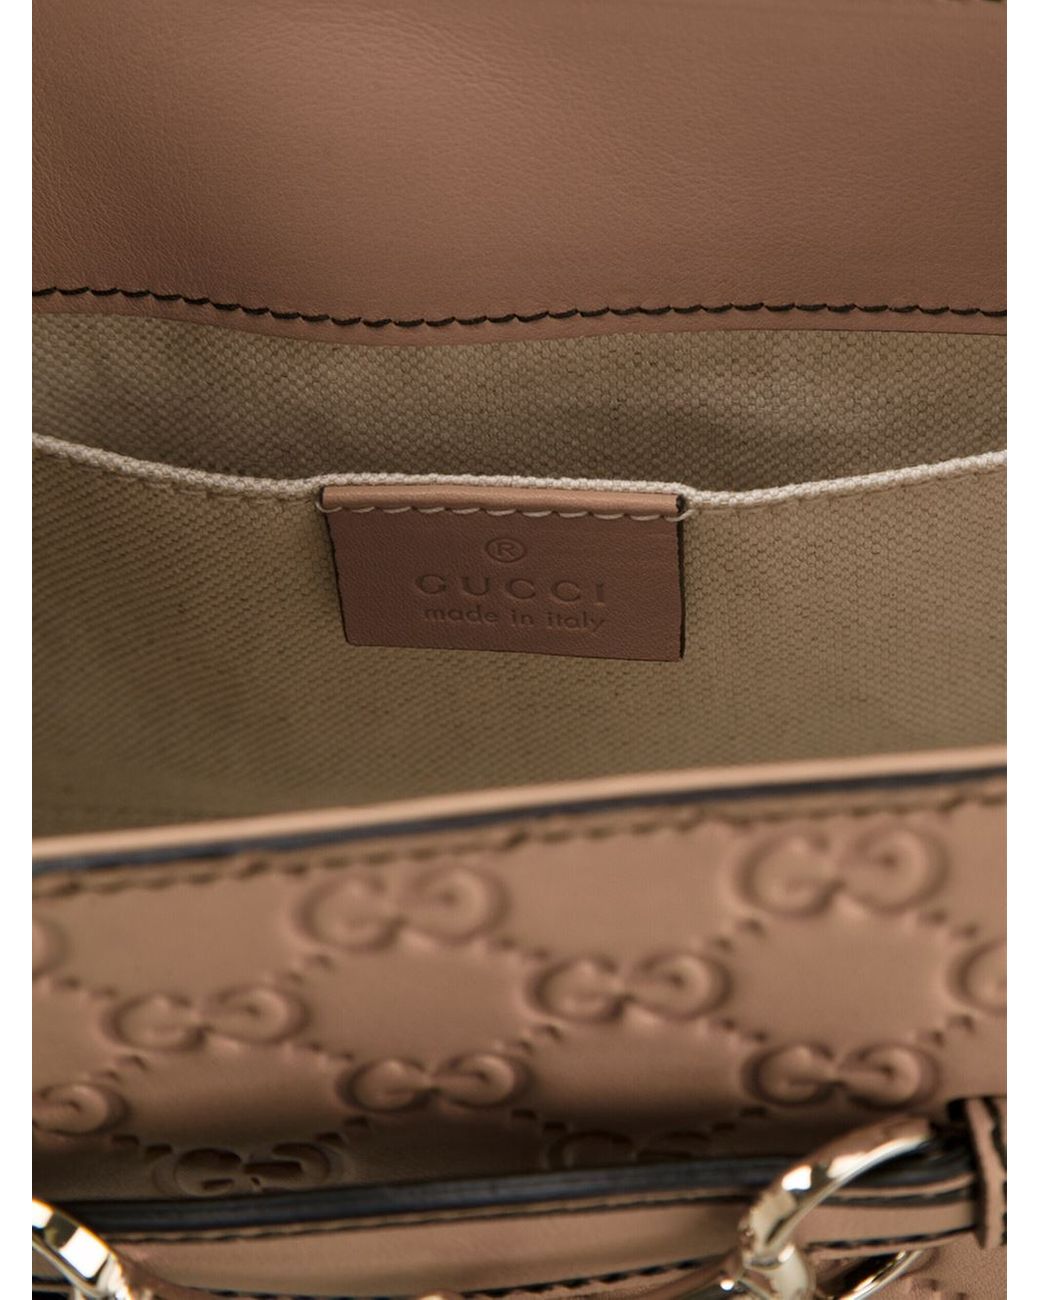 Gucci Emily Medium Calf-leather Shoulder Bag in Natural | Lyst